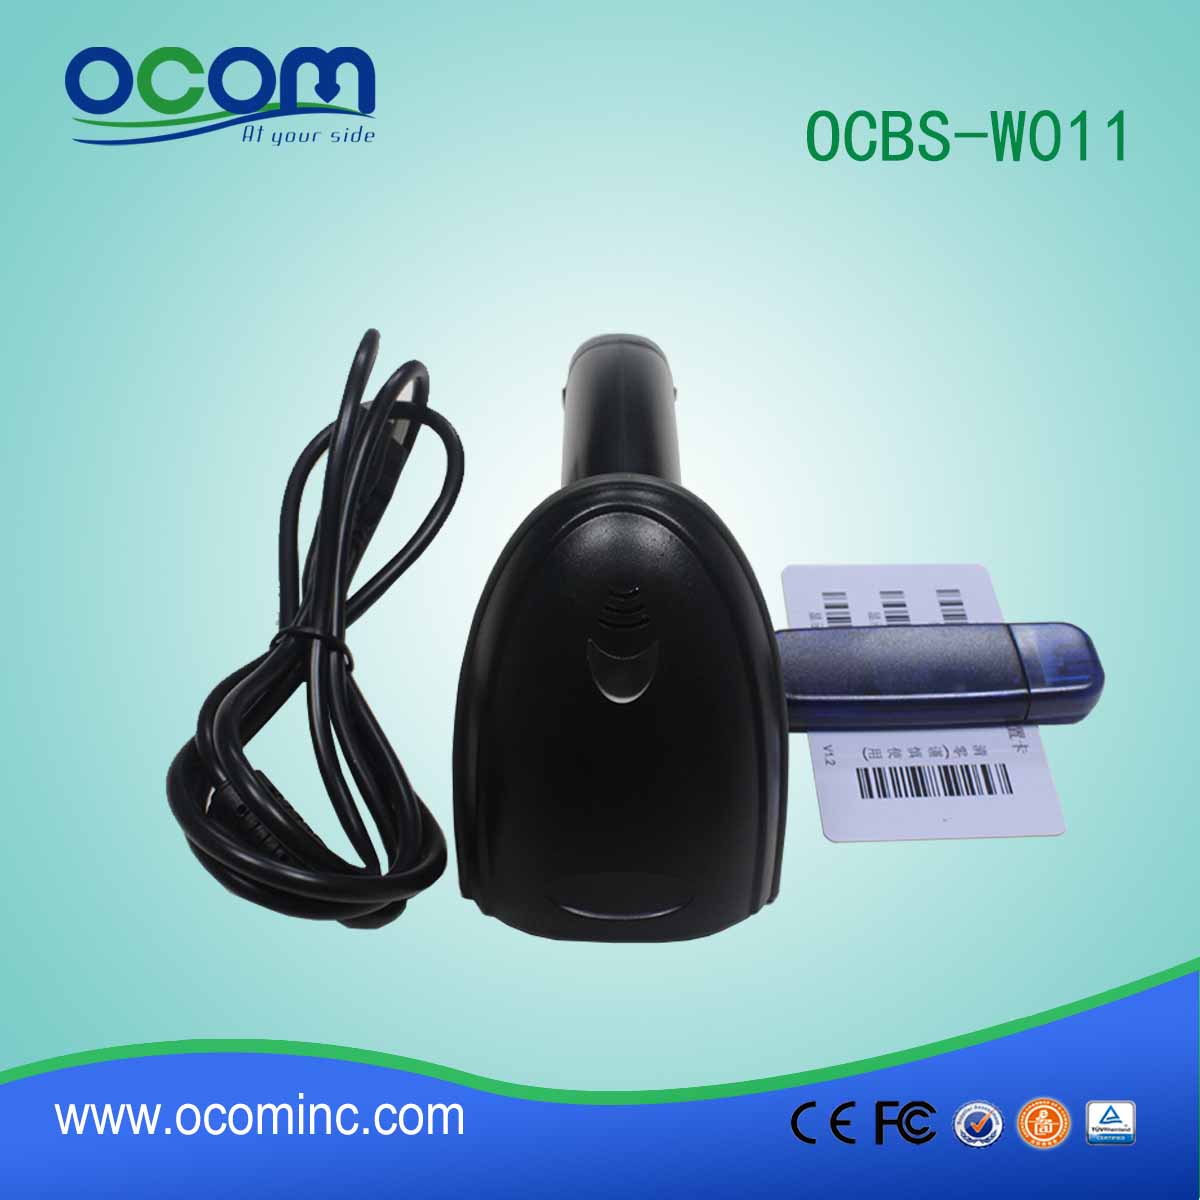 barcode scanner wireless OCBs-W011 mini 433Mhz con ricevitore USB